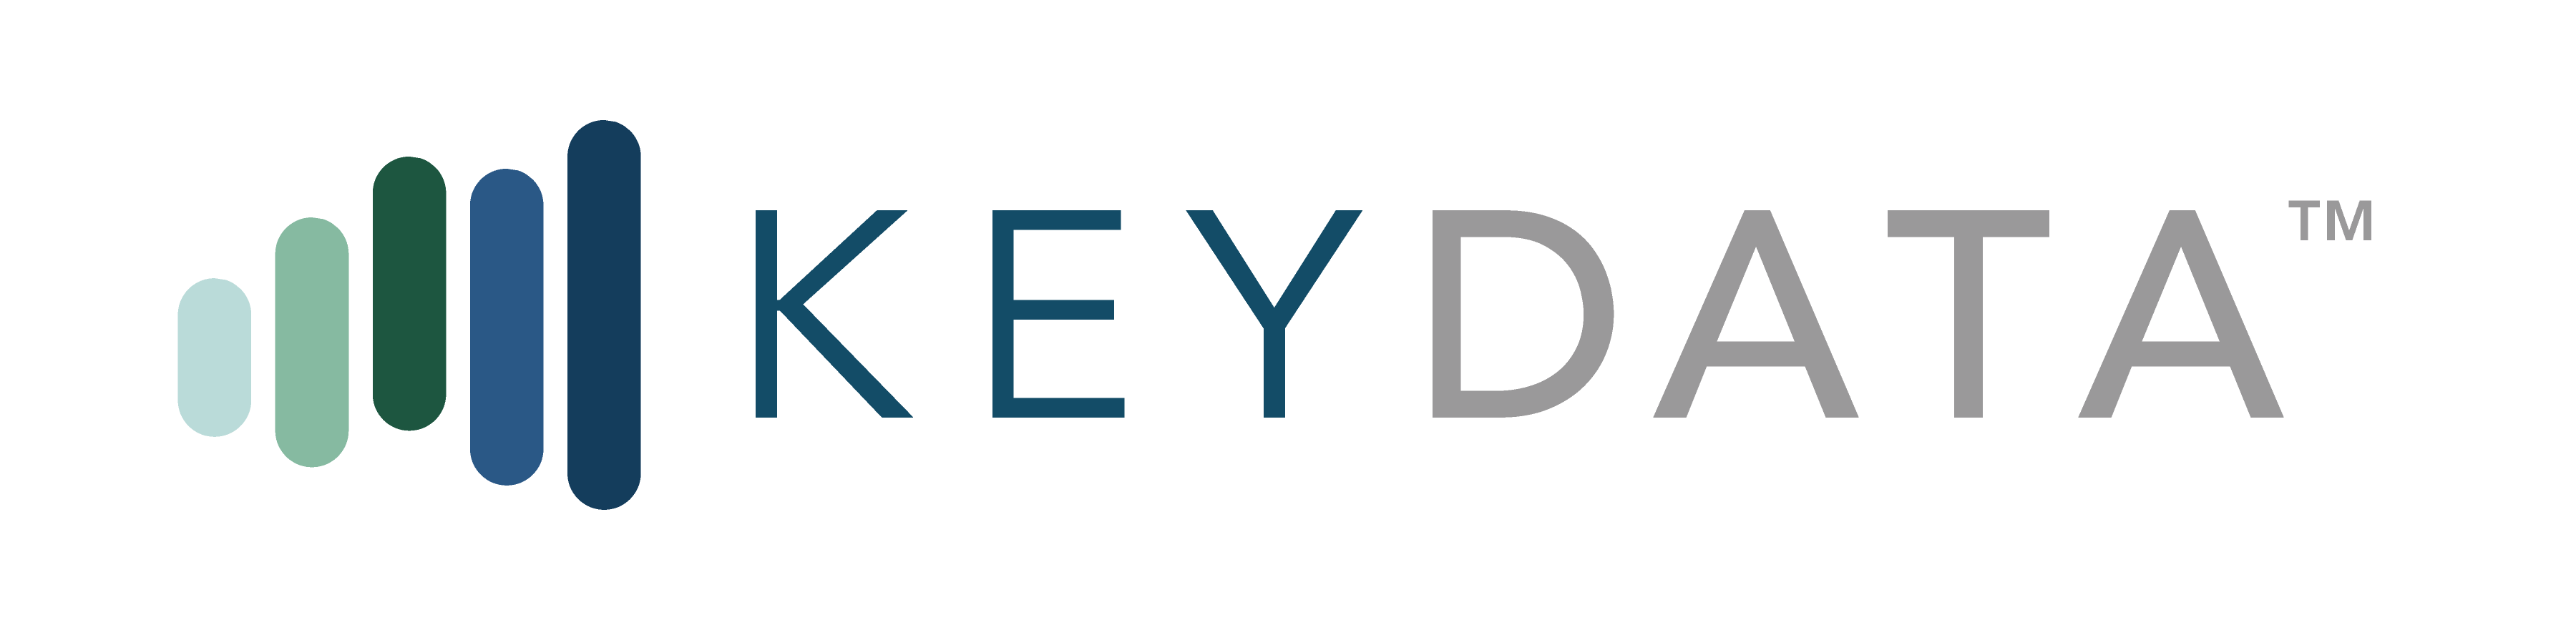 keydata-logo-fullcolor-1